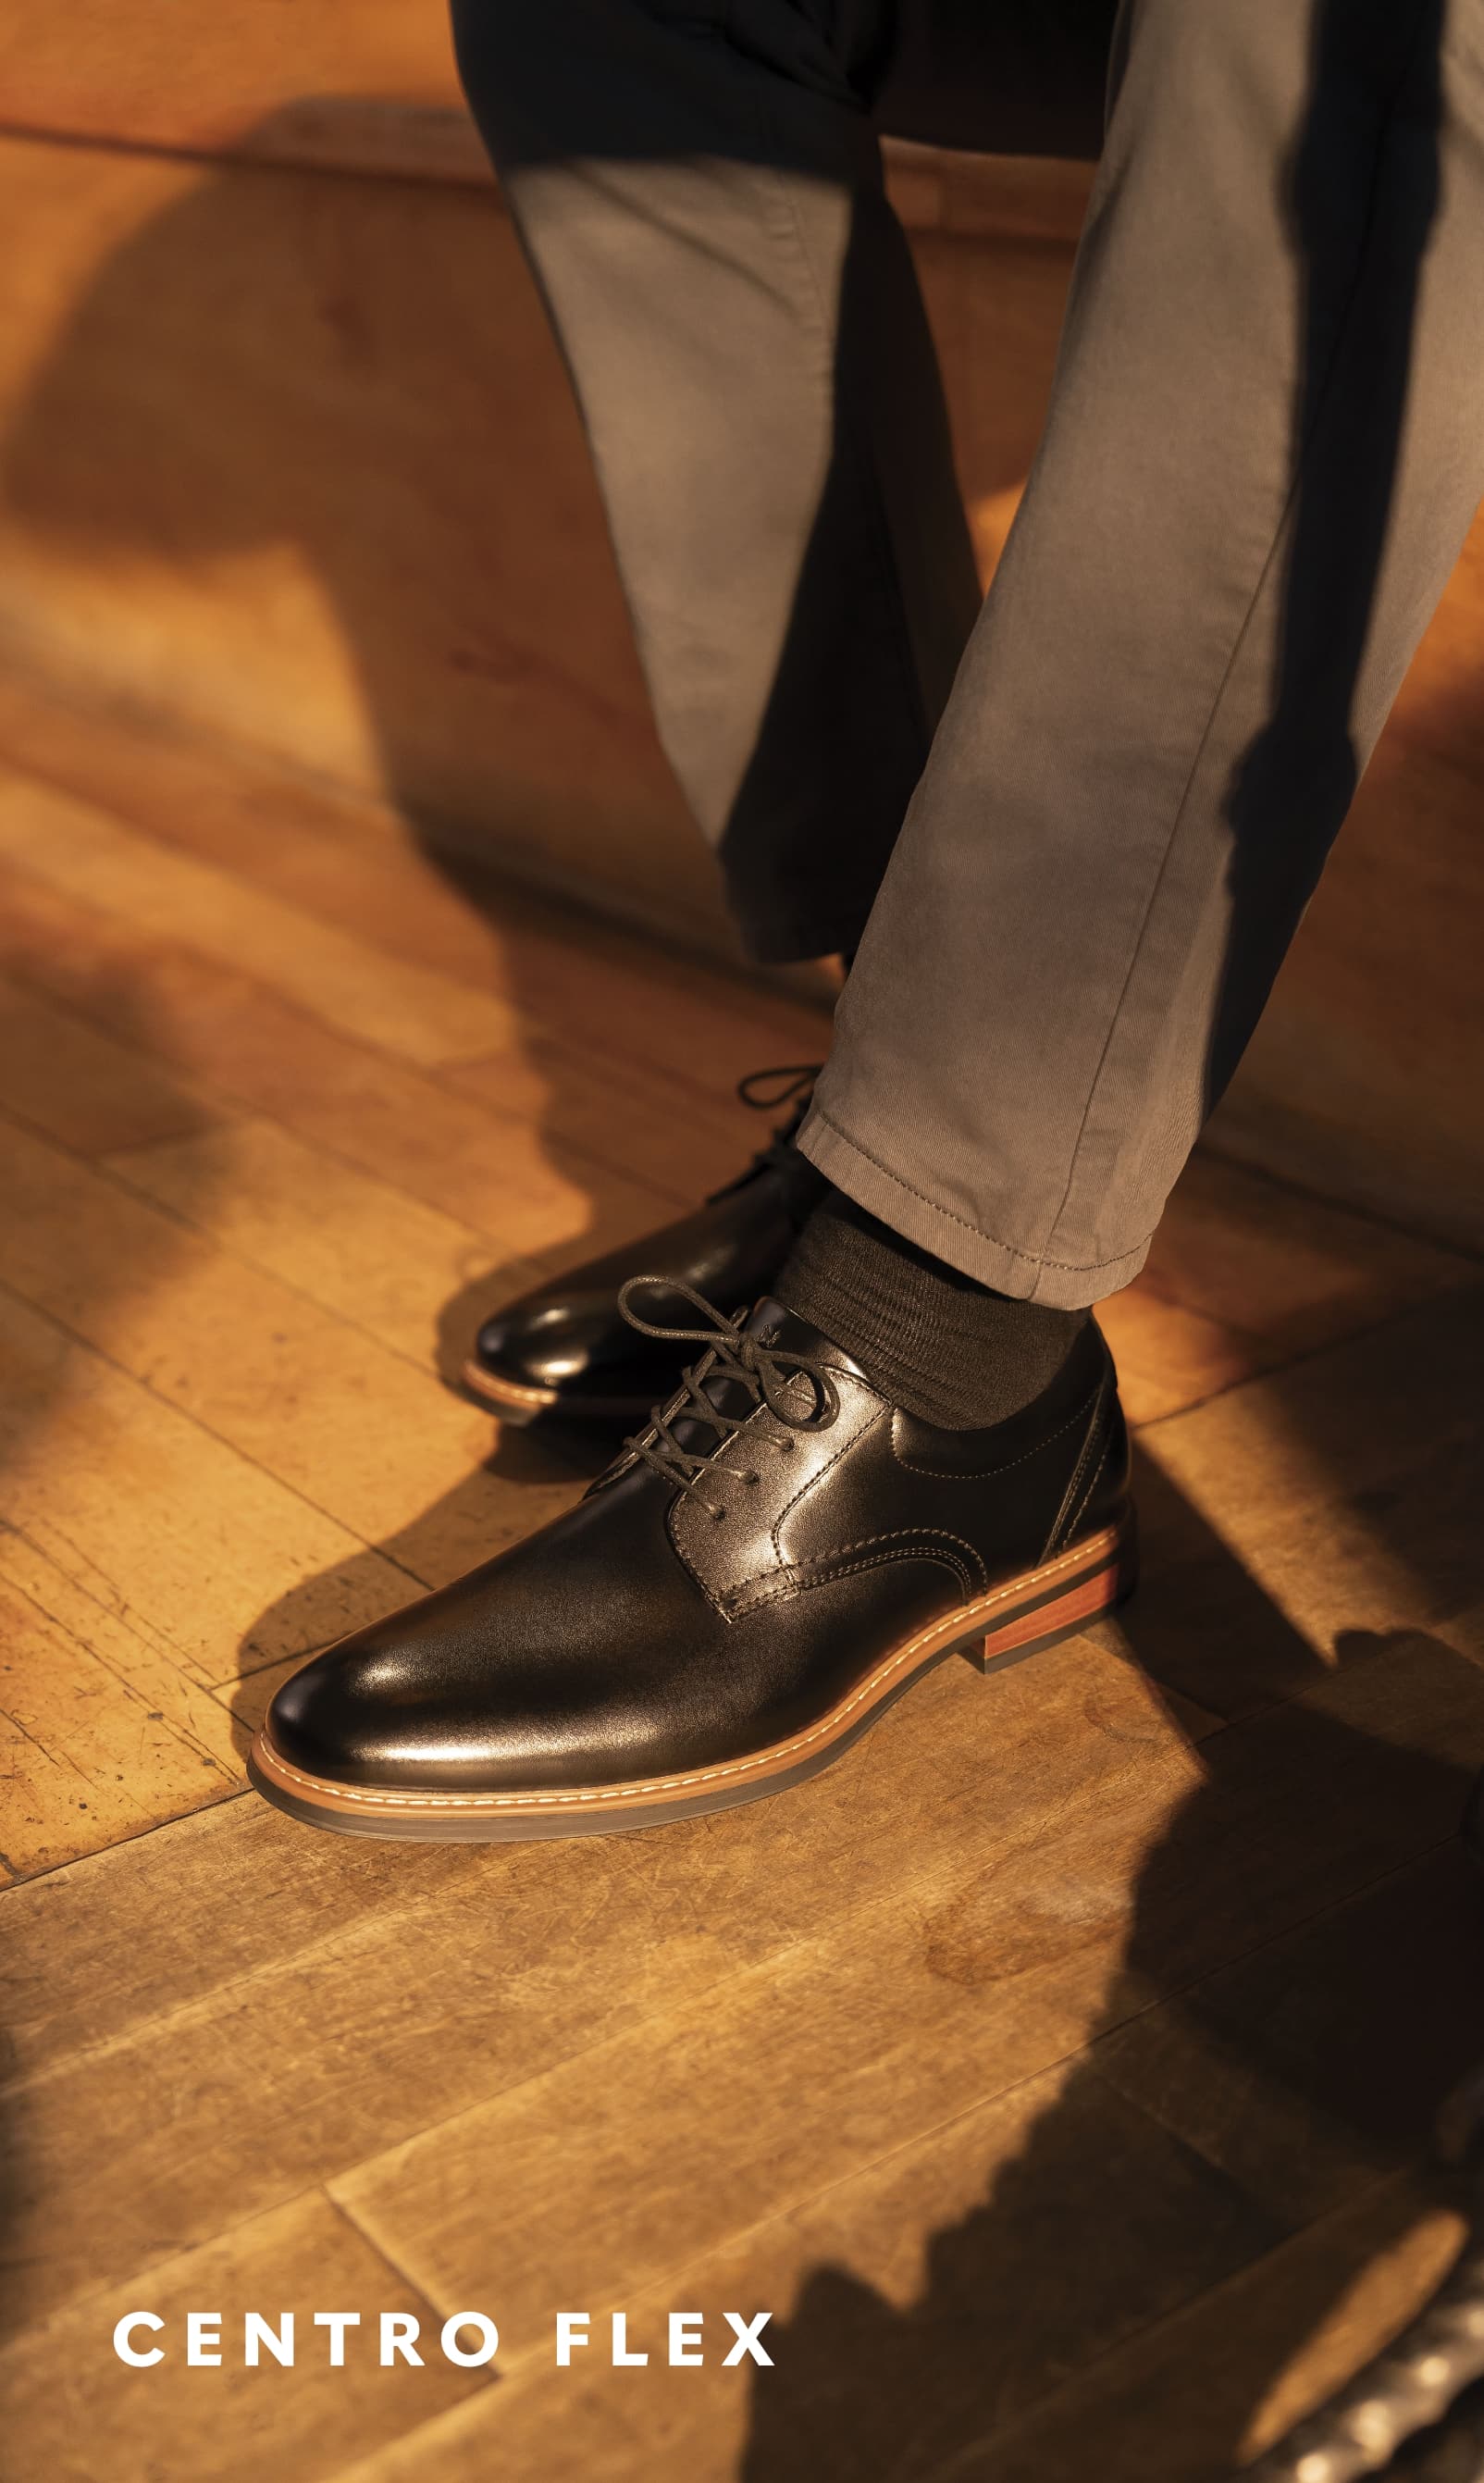 Men's Dress Shoes category. Image features the Centro Flex Plain Toe Oxford in black.